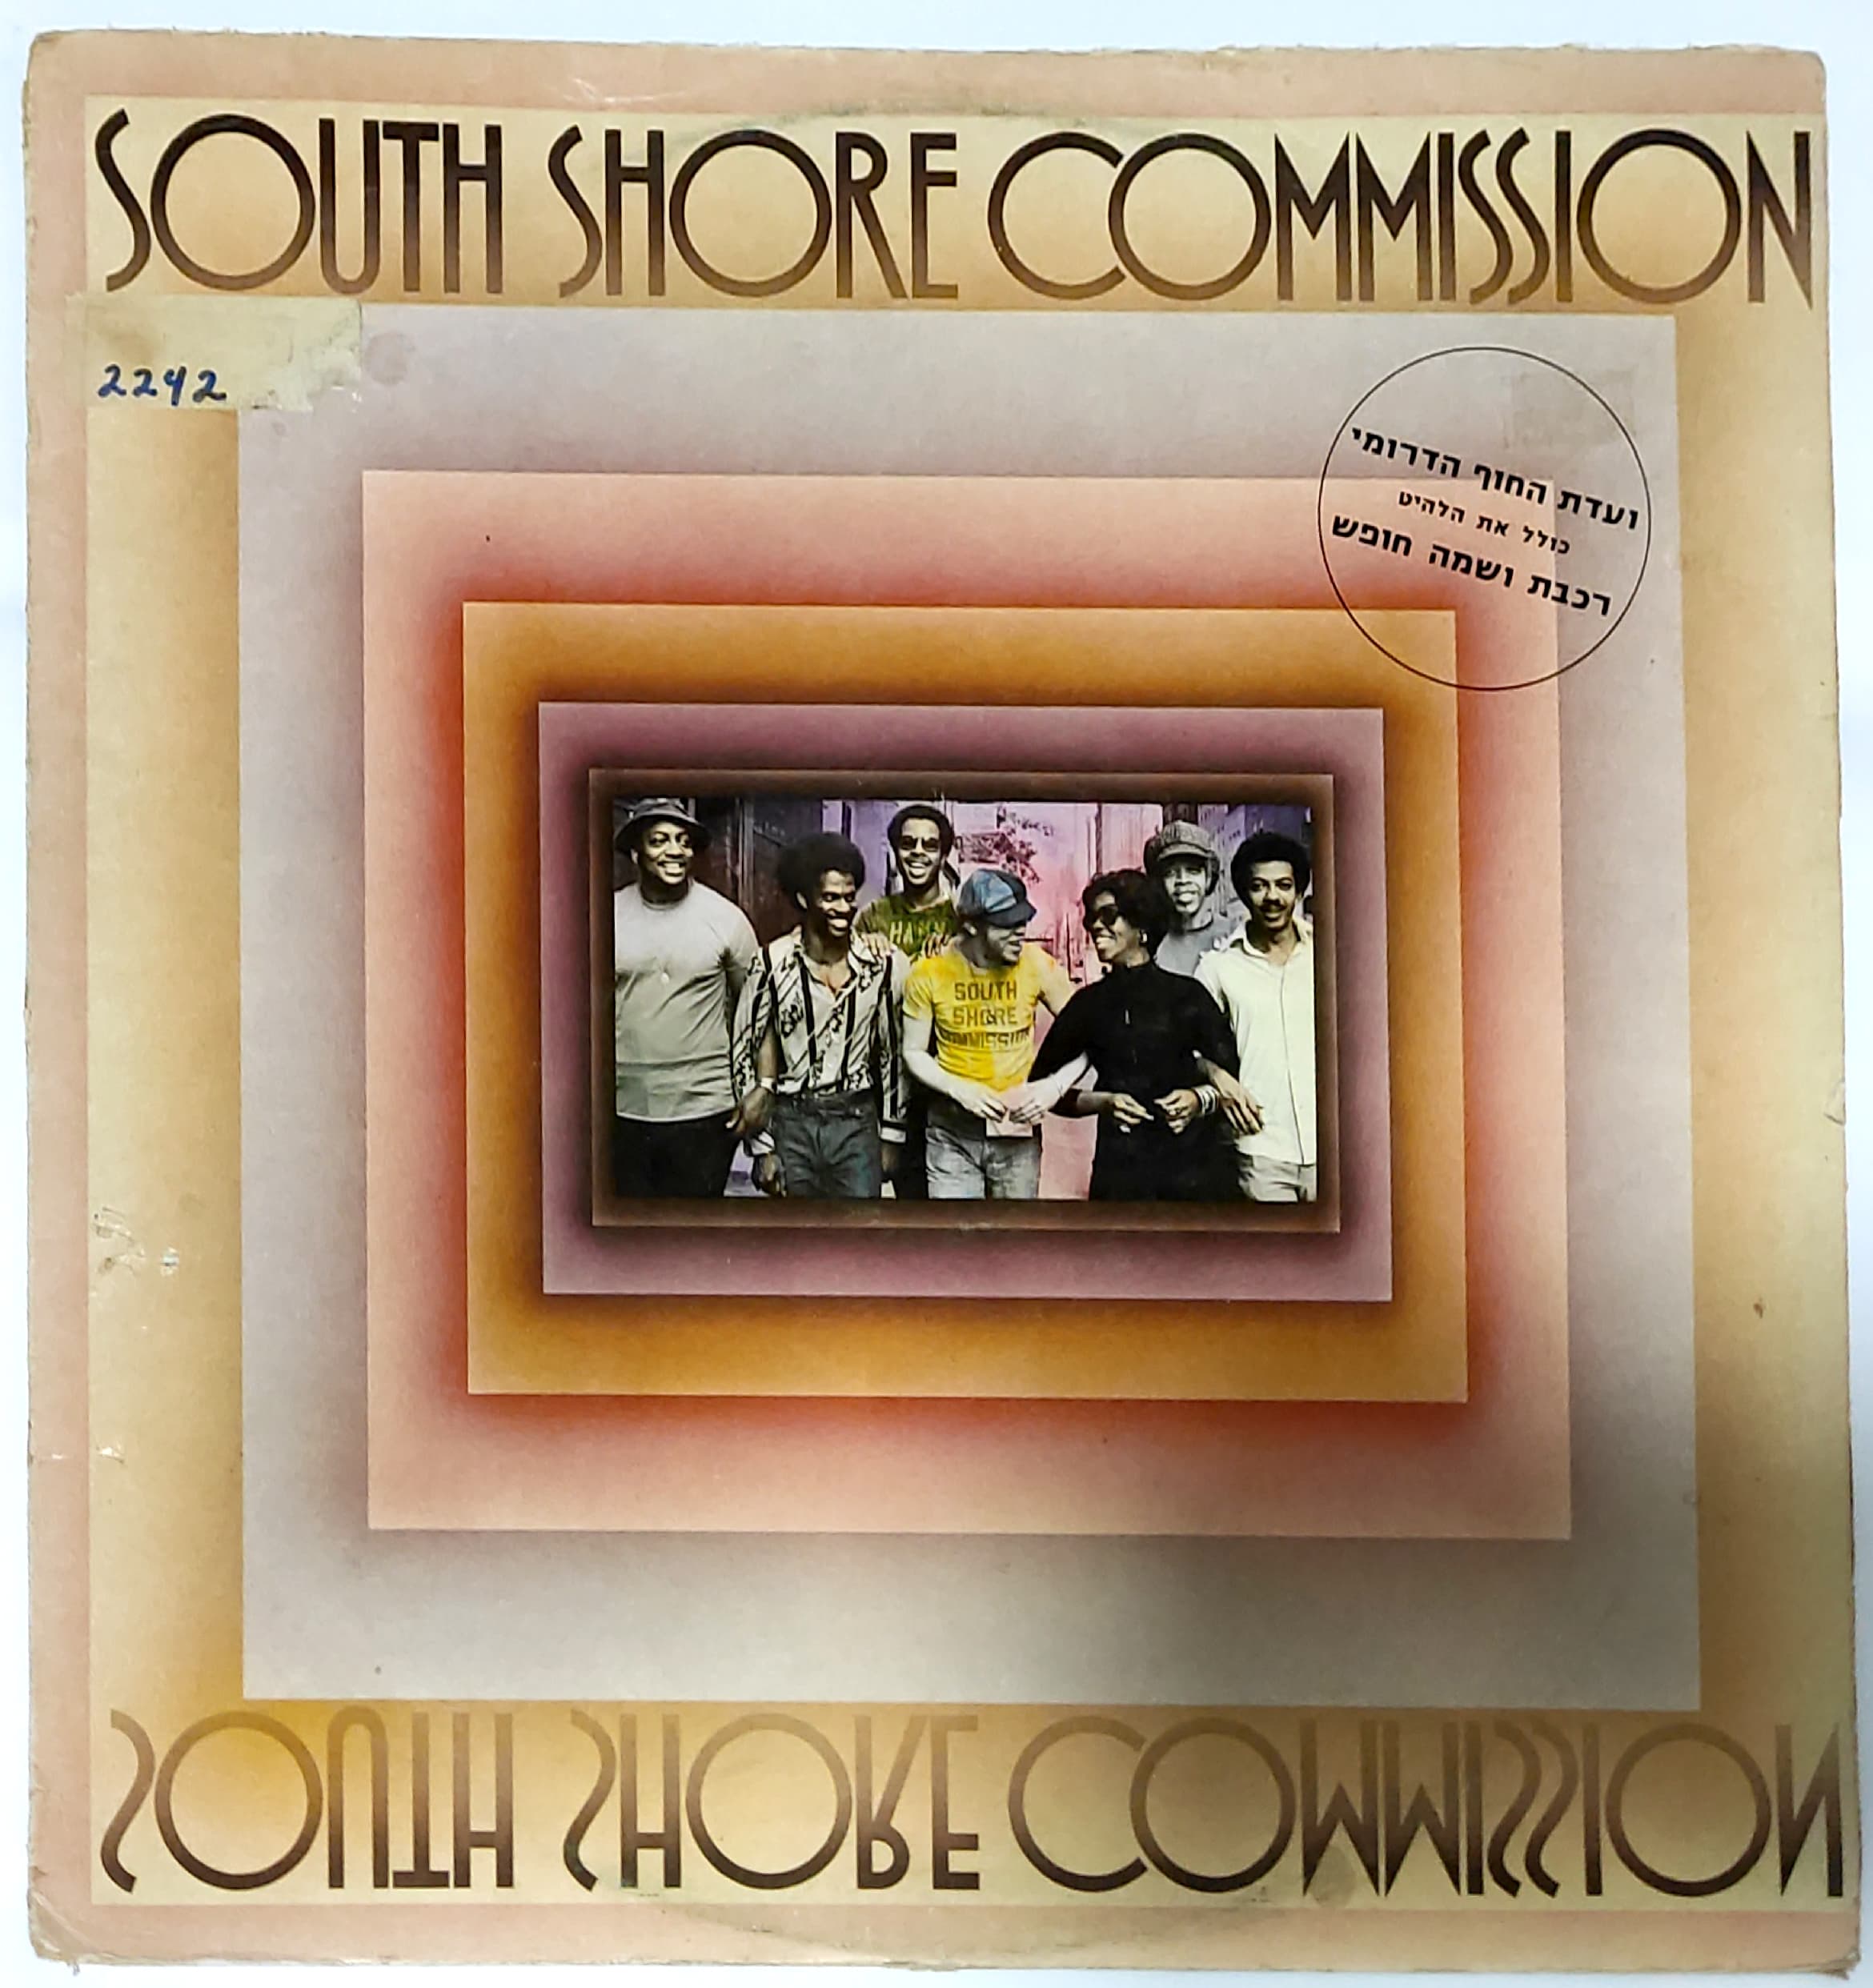 South Shore Commission – South Shore Commission Vinyl Record 1975 Israel